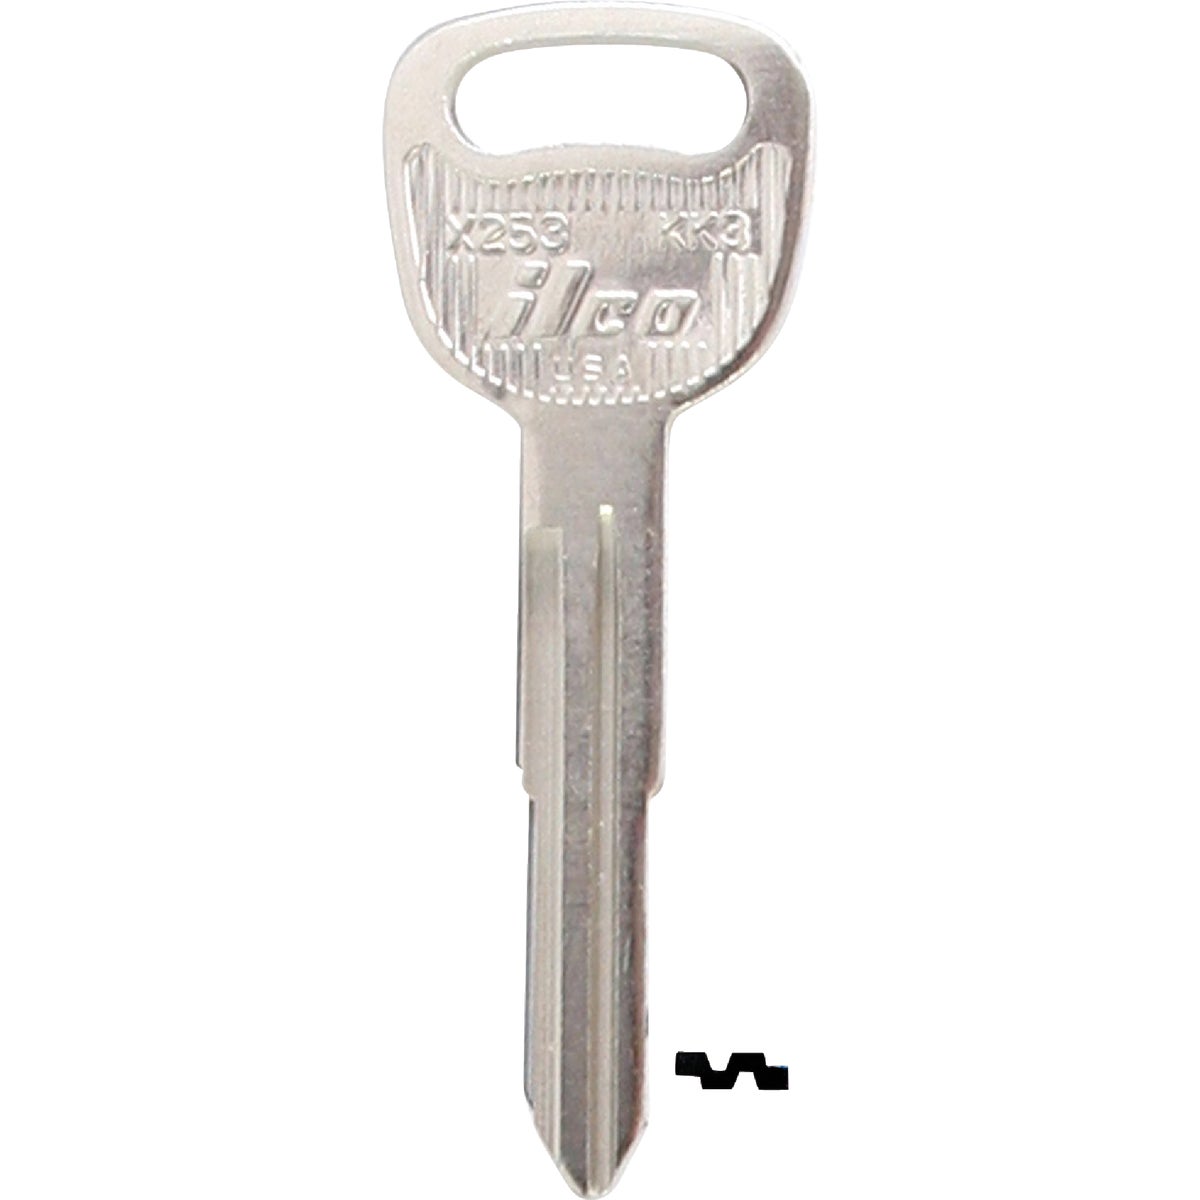 ILCO Kia Nickel Plated Automotive Key, KK3 / X253 (10-Pack)